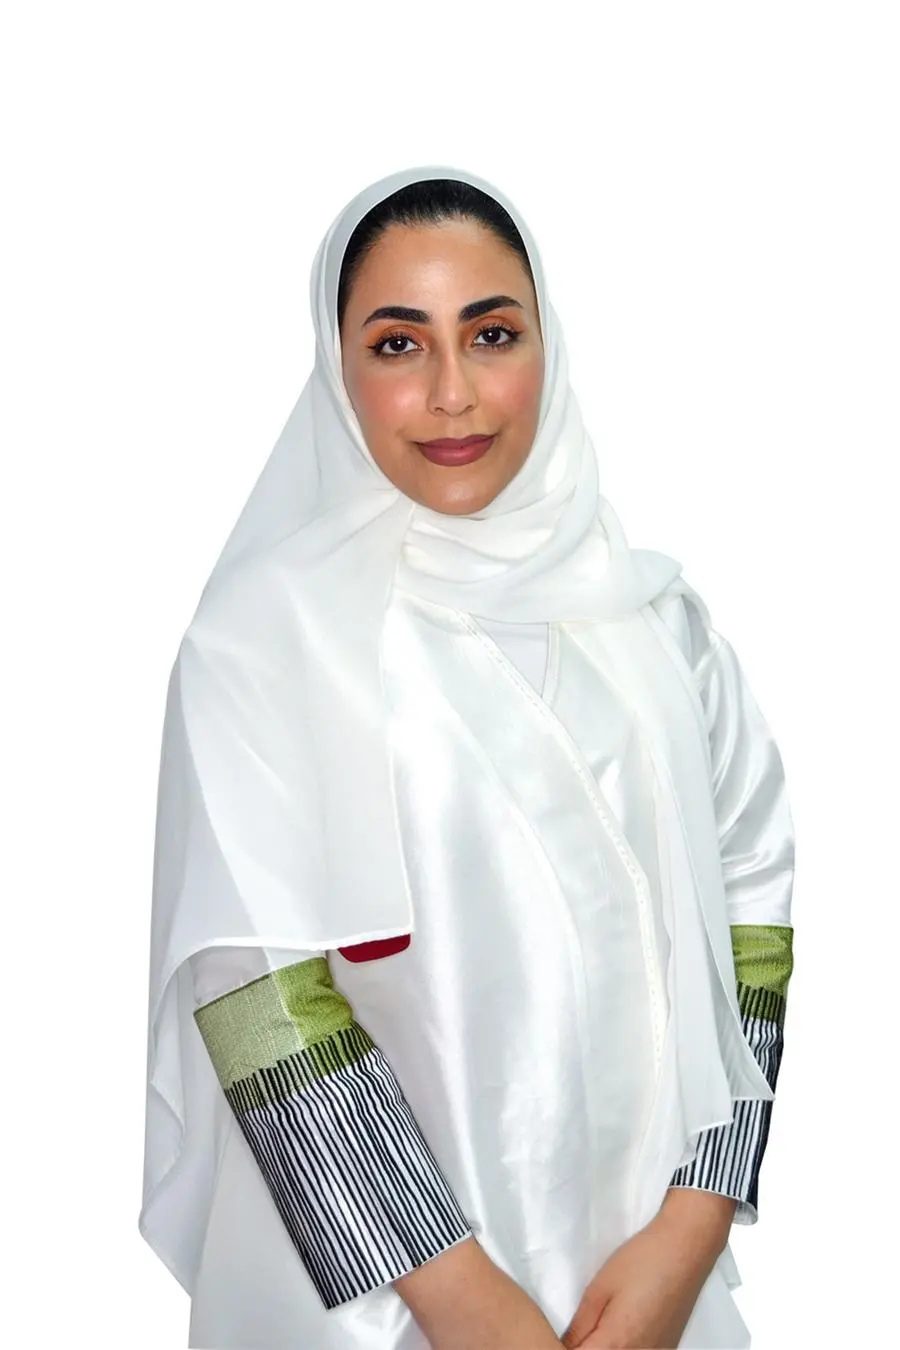 Maryam Al Mansoori, General Manager of Rebound